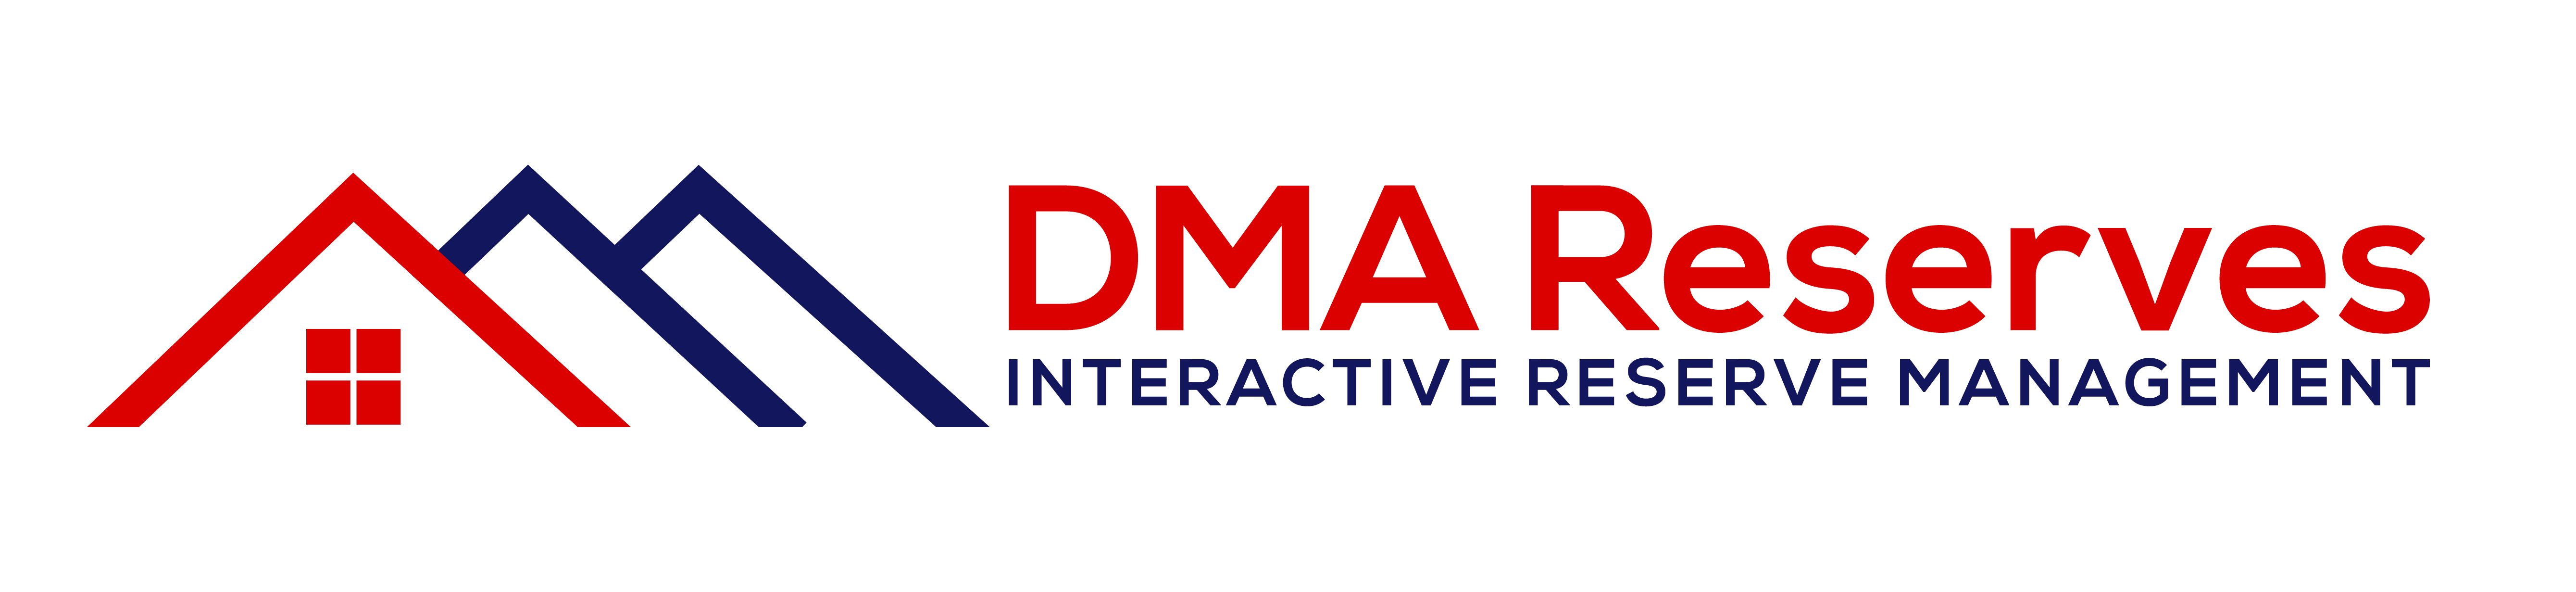 DMA Reserves